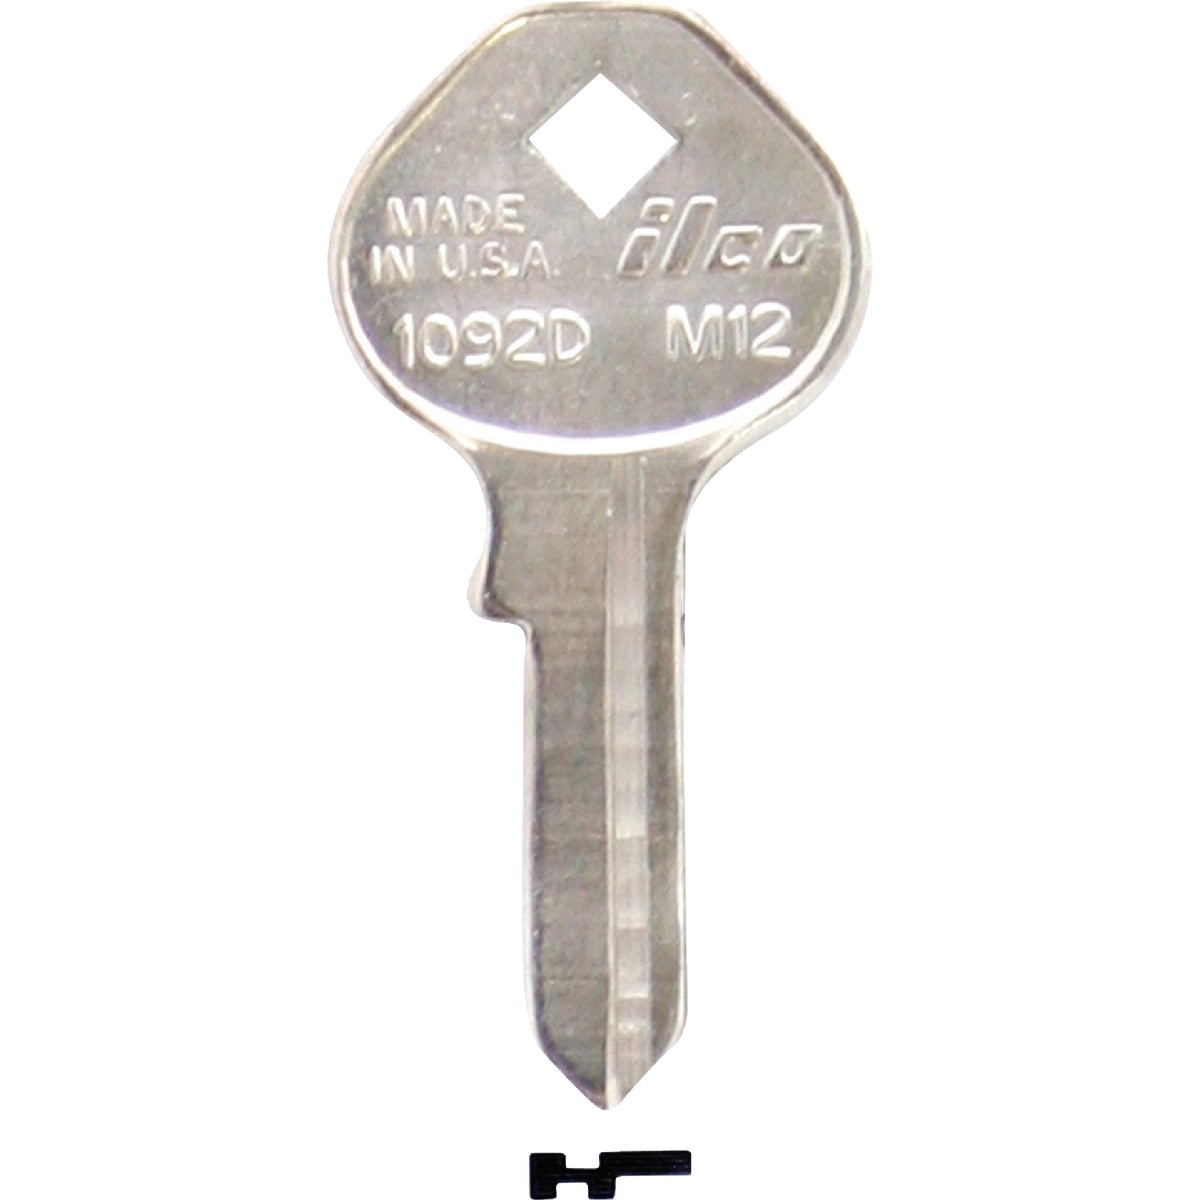 ILCO Master Nickel Plated Padlock Key M12 / 1092D (10-Pack)